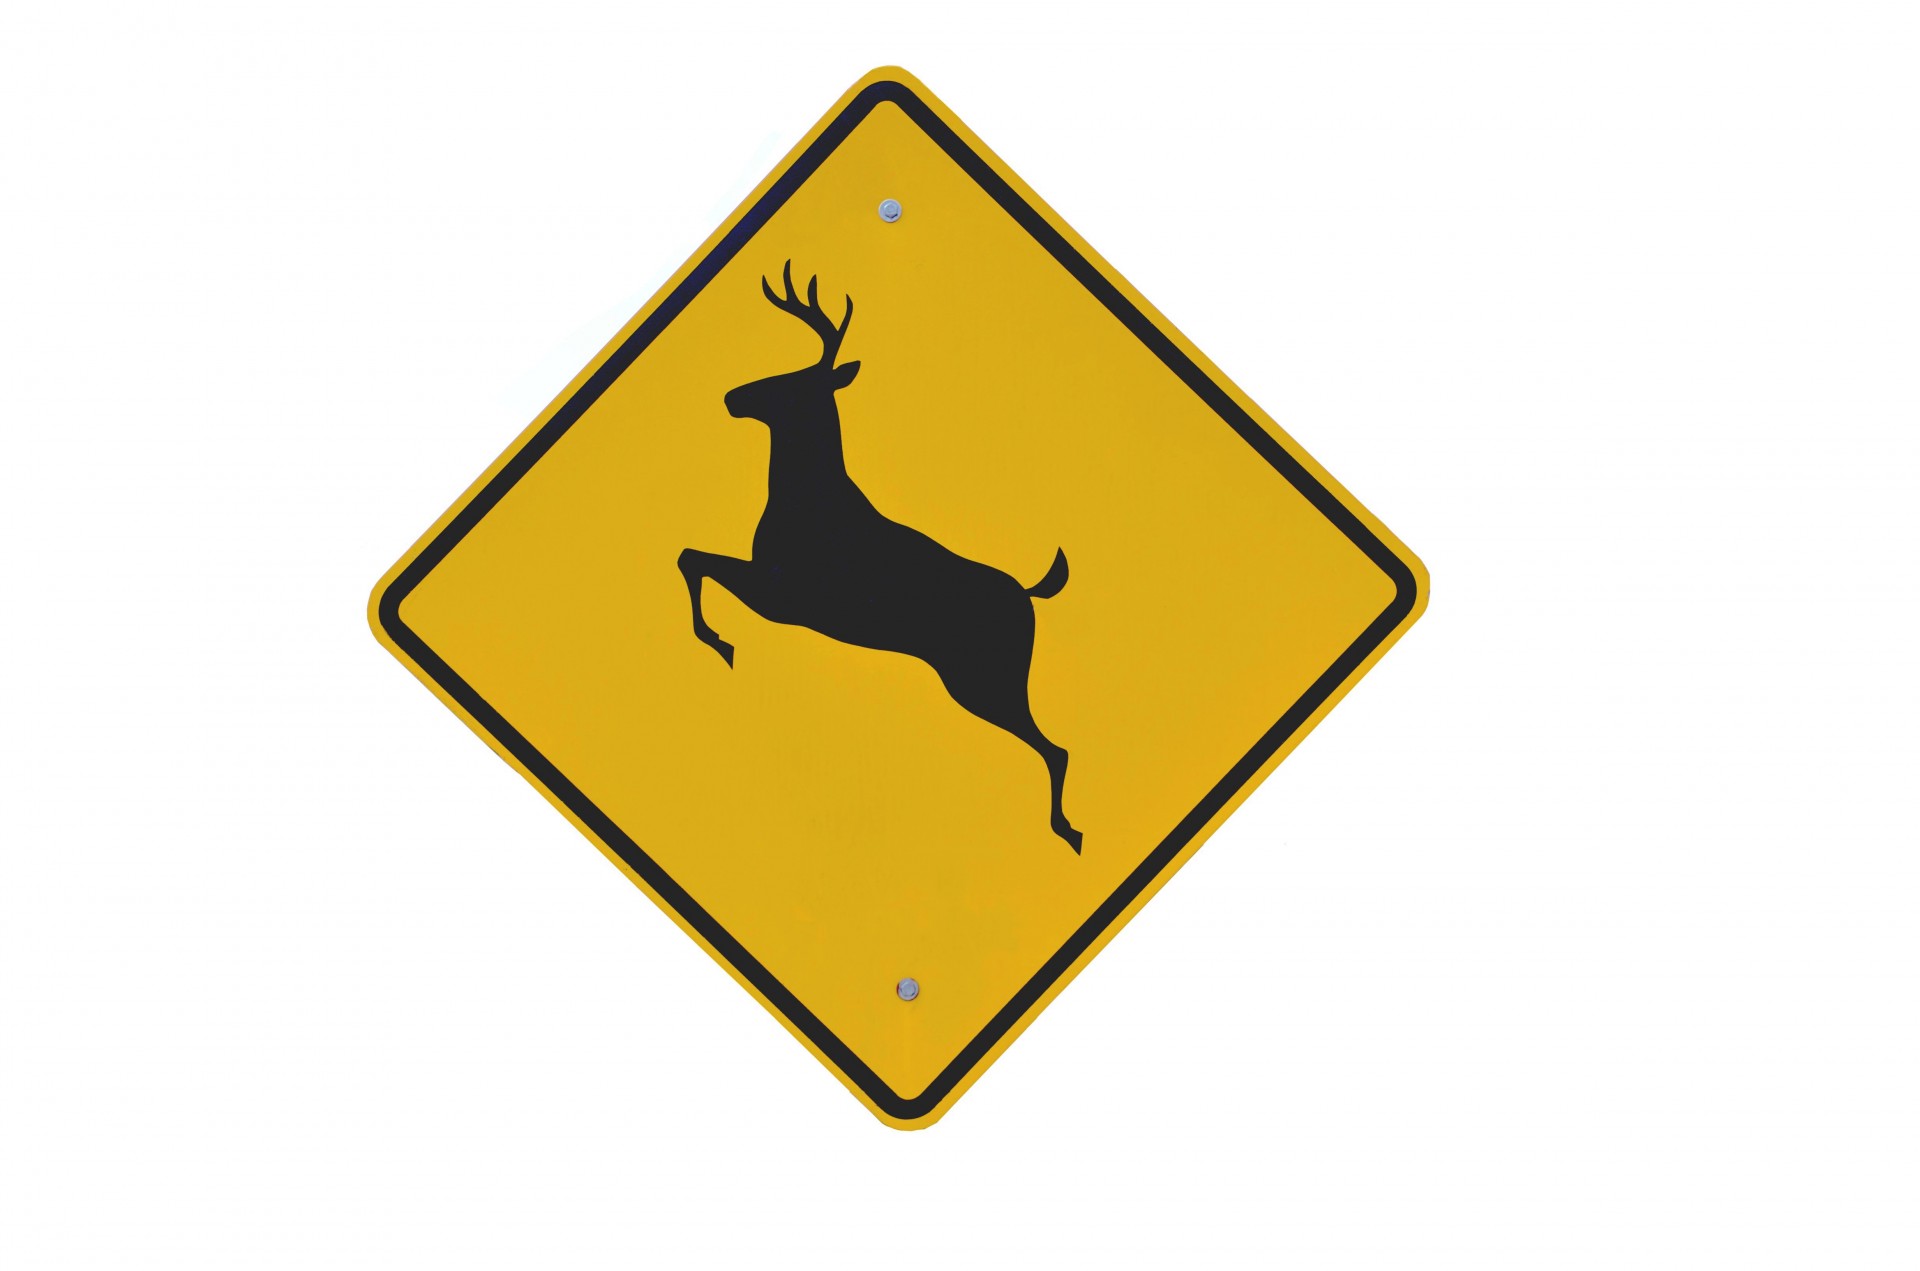 Deer crossing warning sign rural Georgia, USA